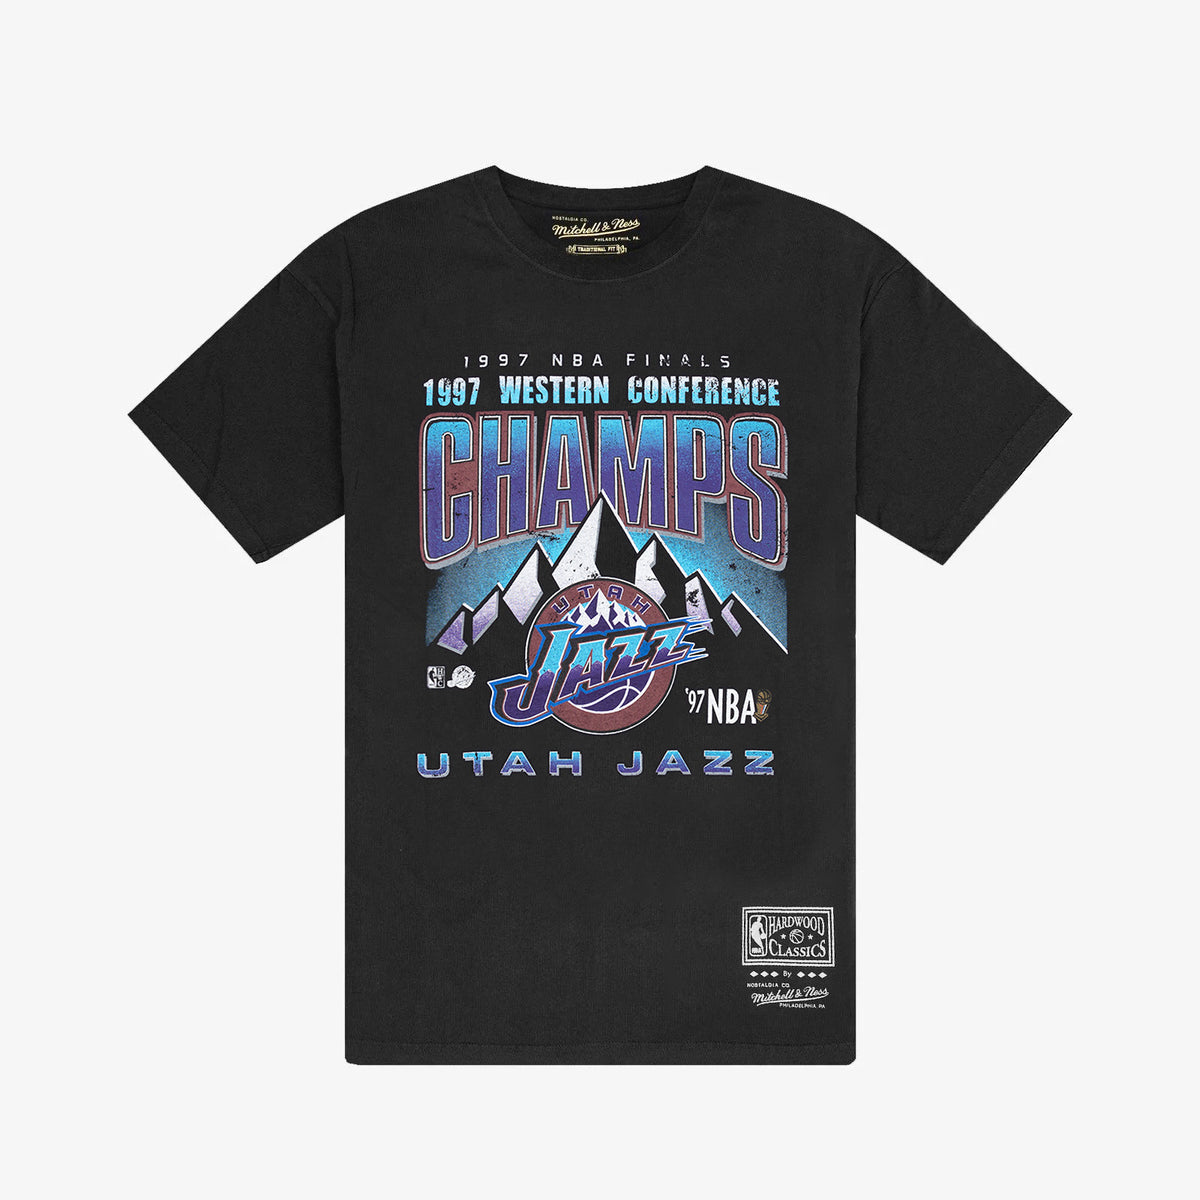 Nike Women's Utah Jazz Black Dri-Fit T-Shirt, Medium